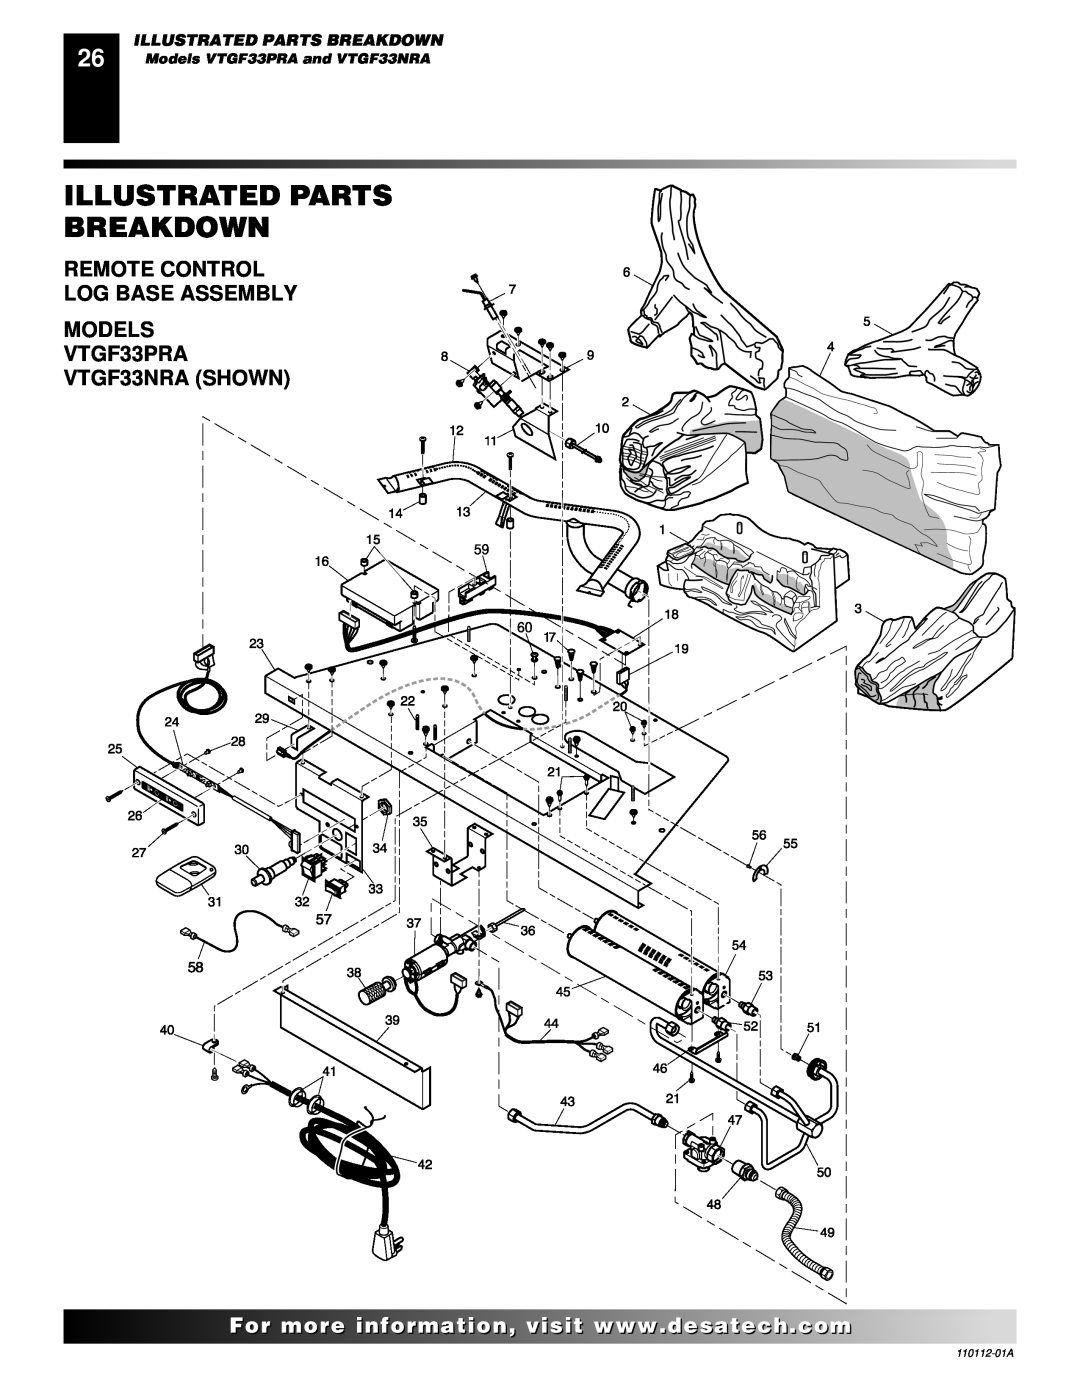 Desa Illustrated Parts Breakdown, REMOTE CONTROL LOG BASE ASSEMBLY MODELS VTGF33PRA VTGF33NRA SHOWN, For..com 